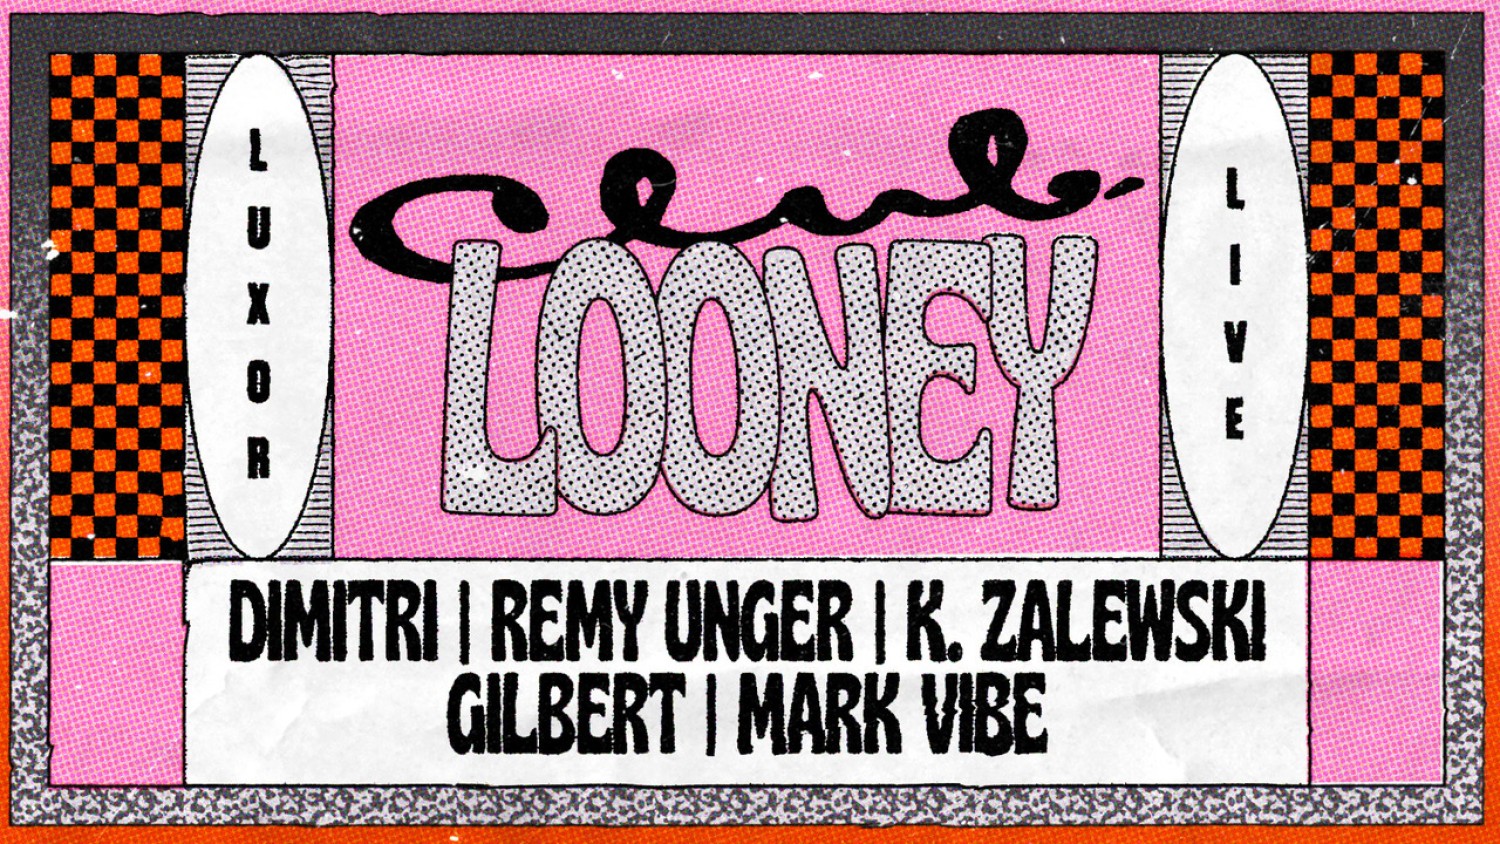 Club Looney